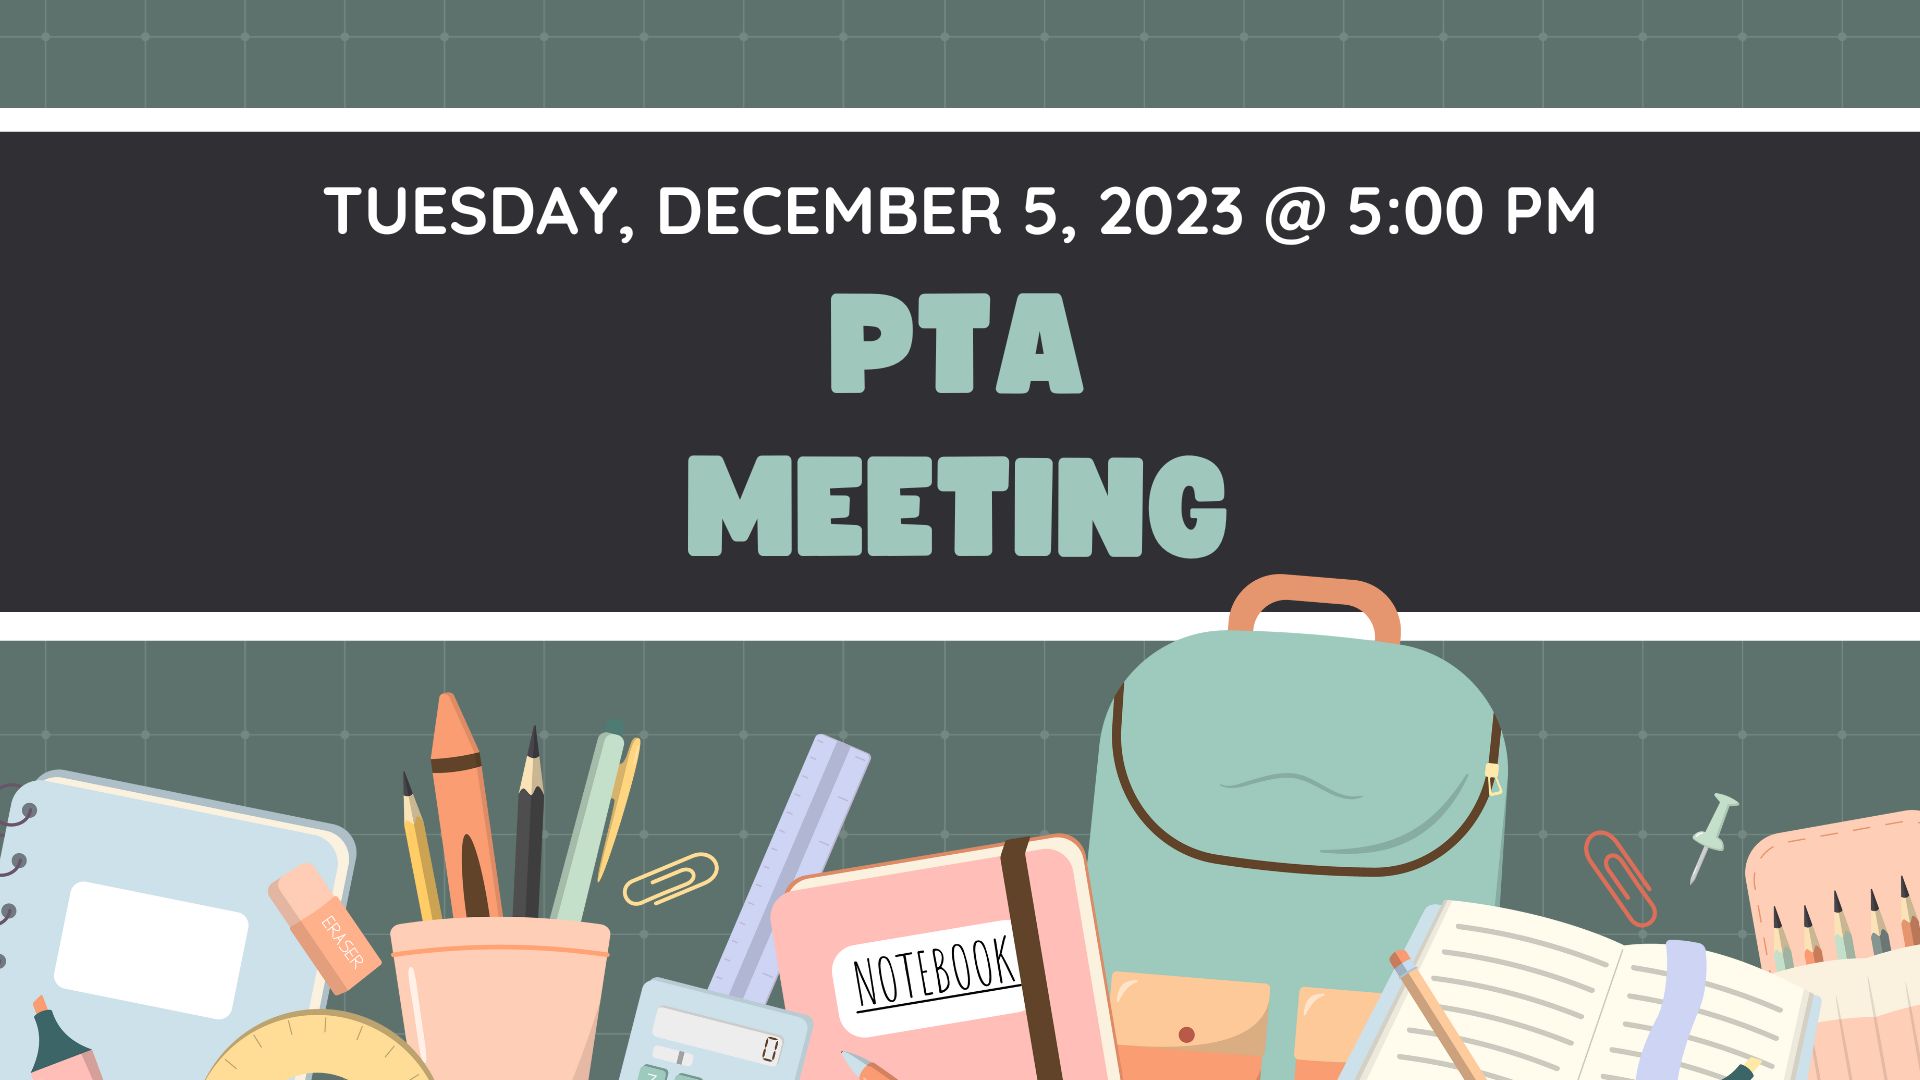 Tuesday, December 5, 2023 @ 5:00 pm PTA Meetng